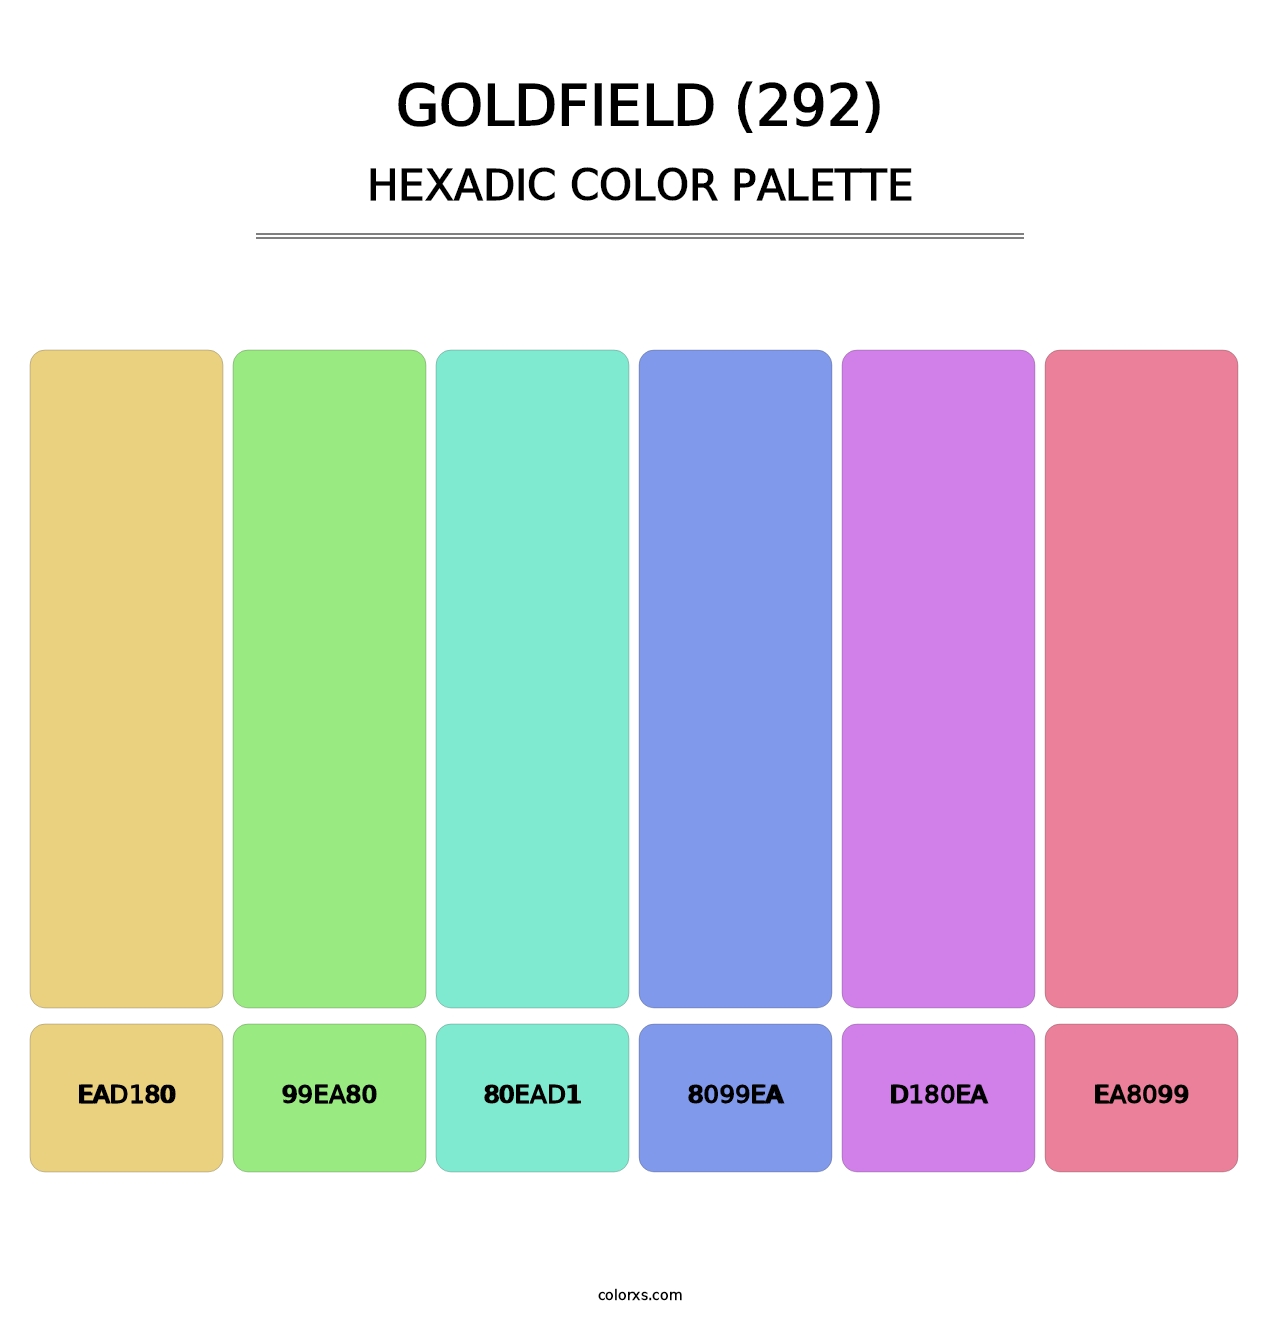 Goldfield (292) - Hexadic Color Palette